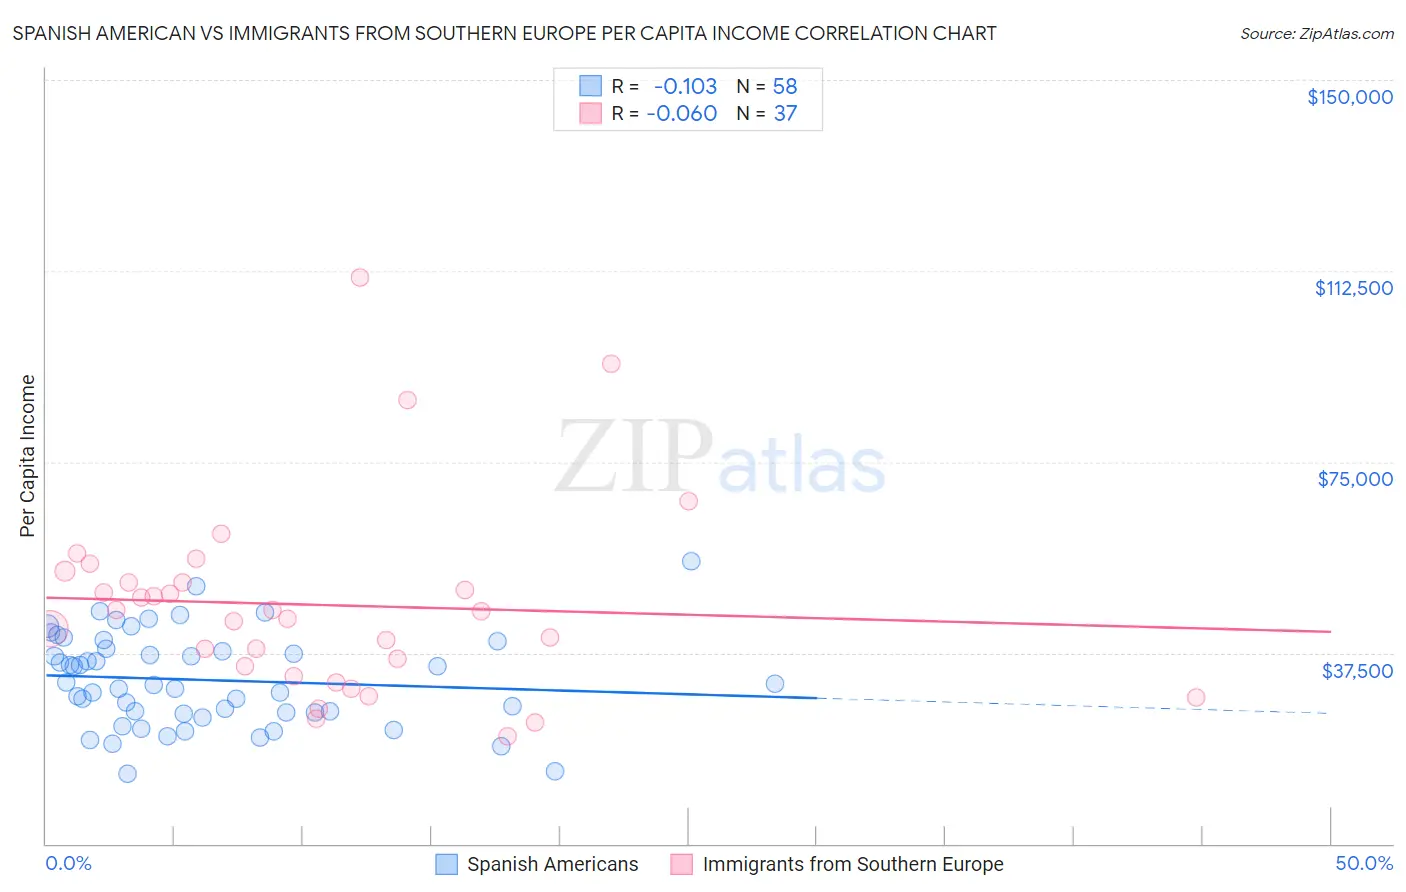 Spanish American vs Immigrants from Southern Europe Per Capita Income